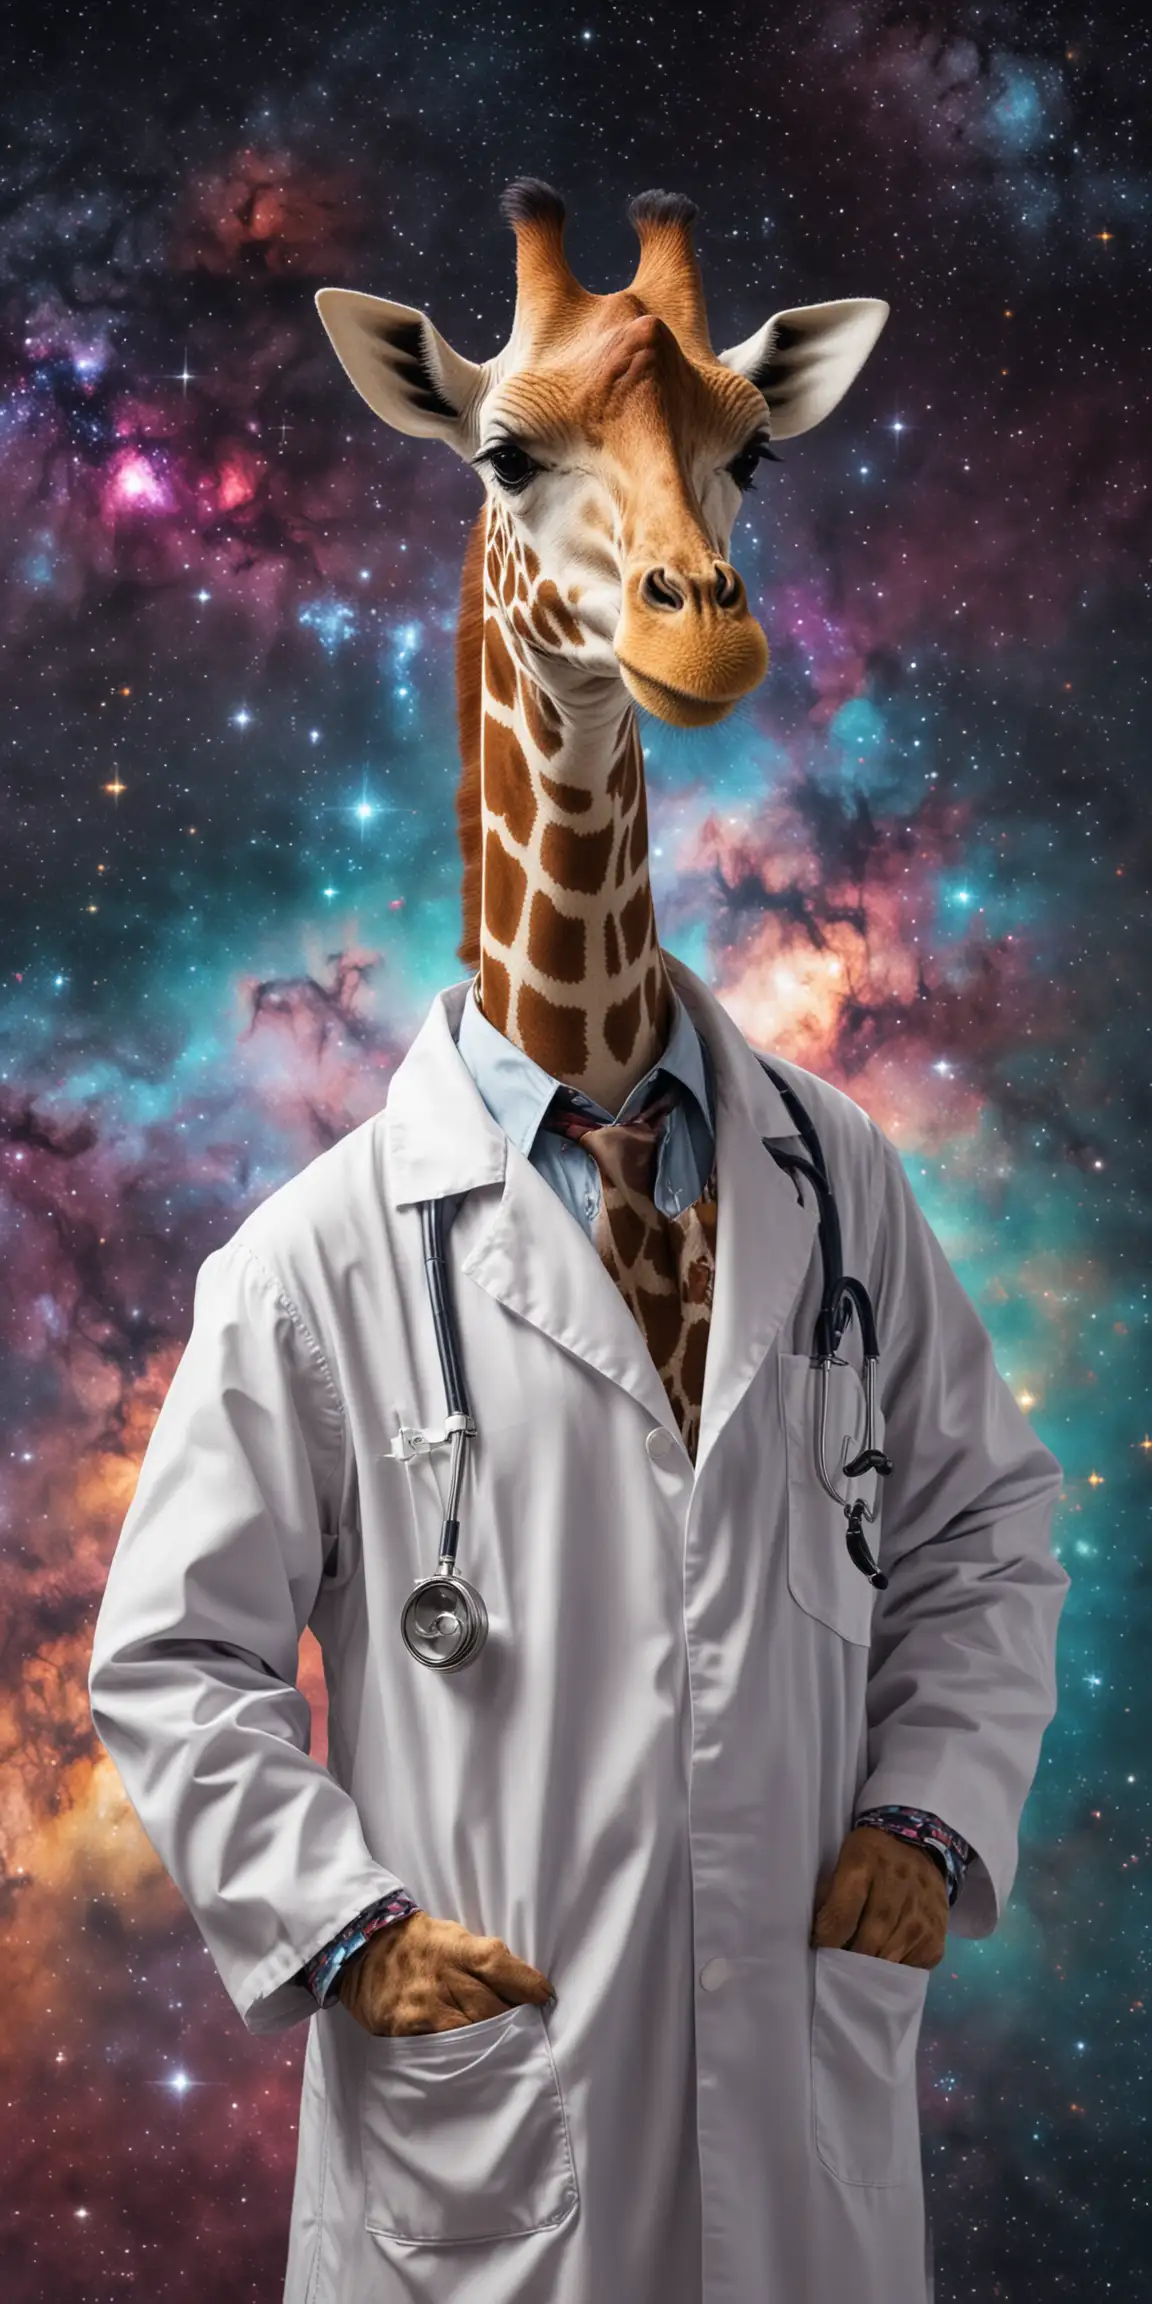 Space Giraffe Doctor Galactic Explorer in Medical Attire